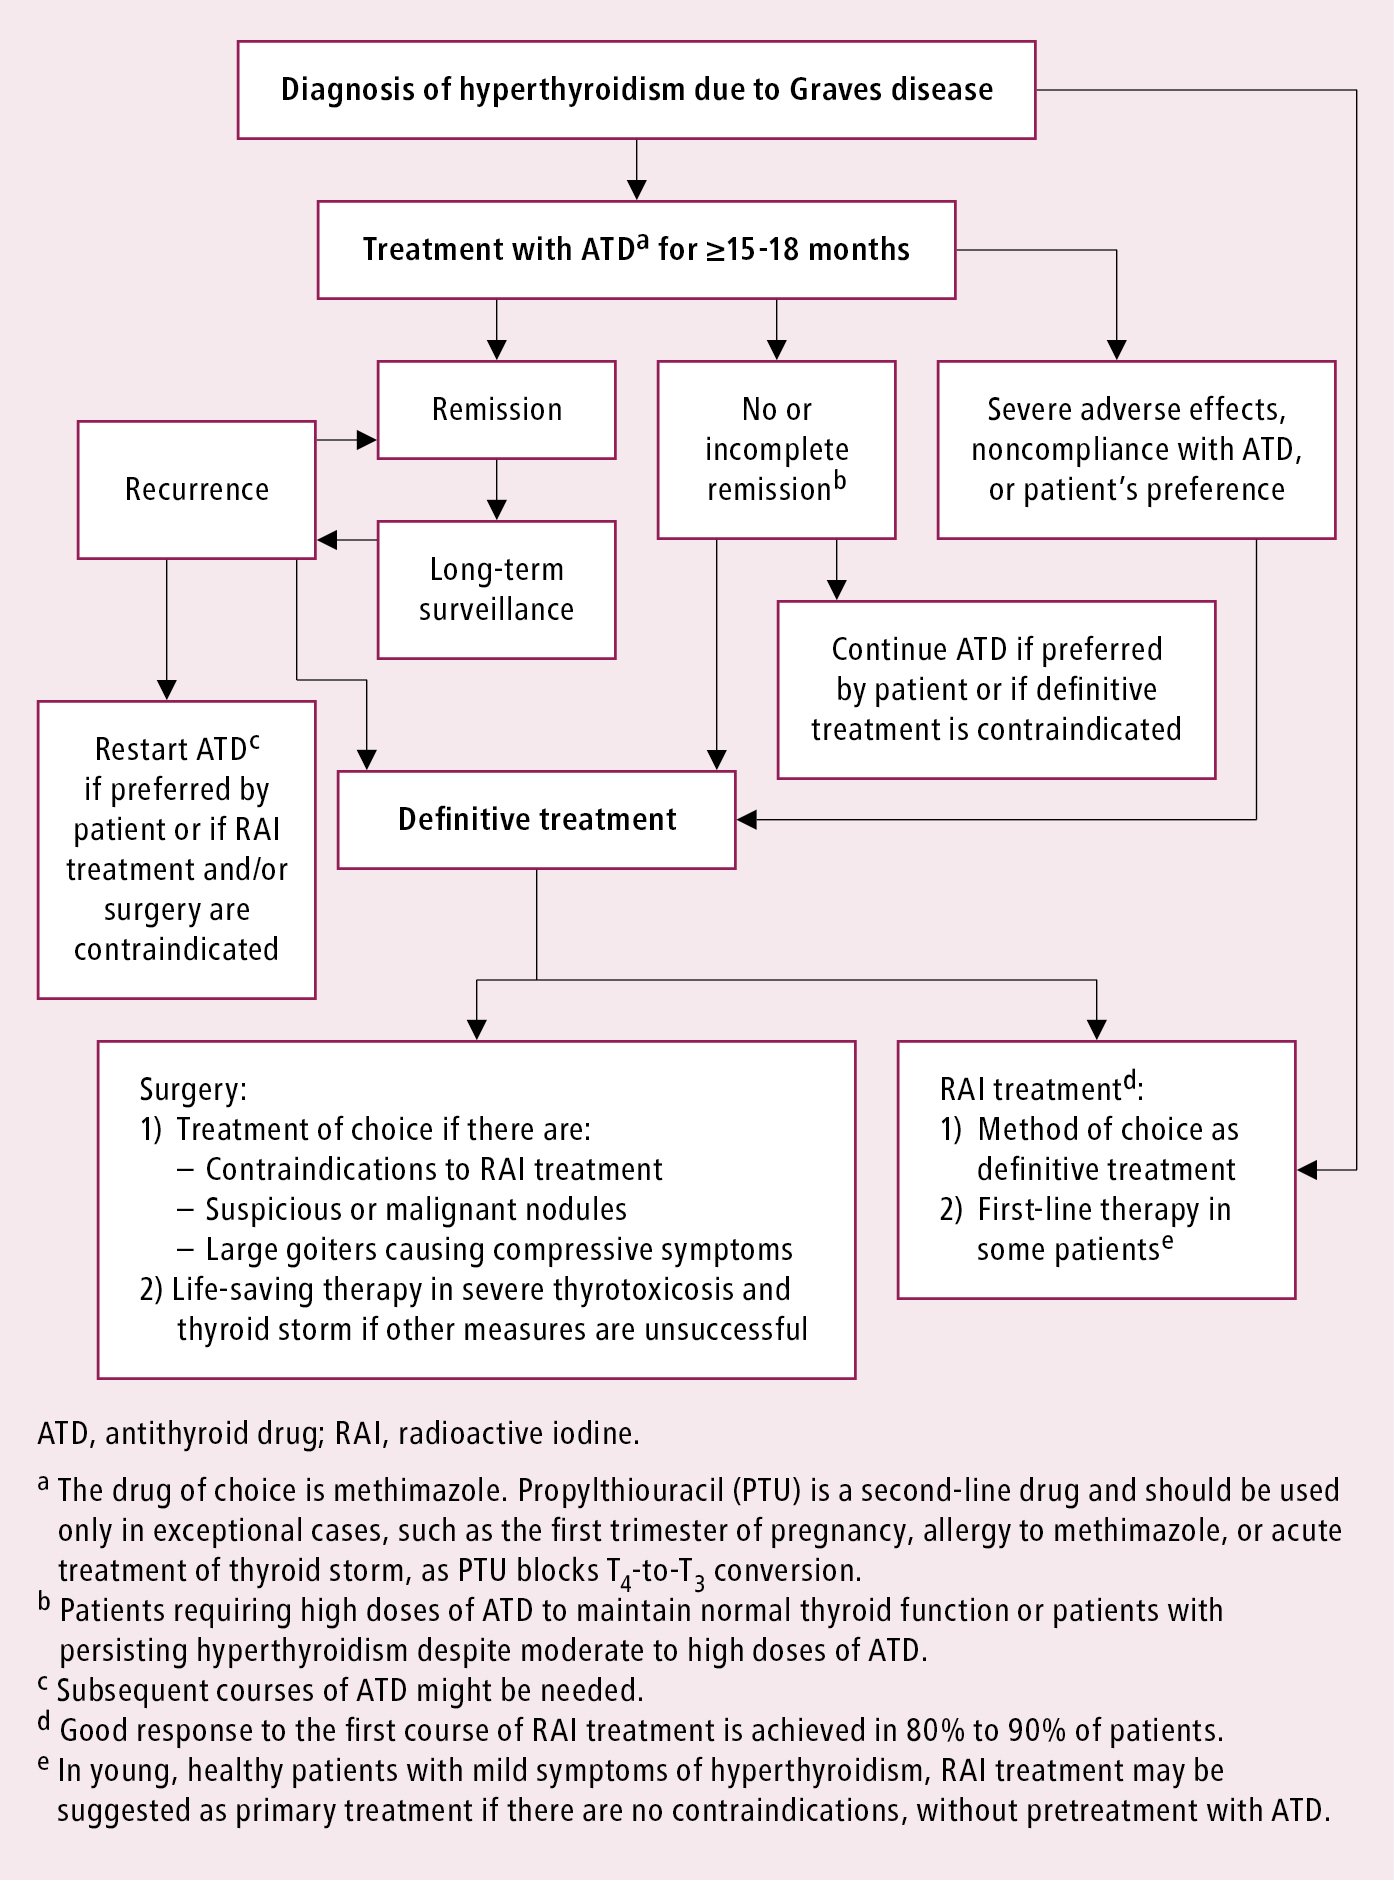 Figure 031_1_6665.  Graves disease. Basic principles of hyperthyroidism management. 